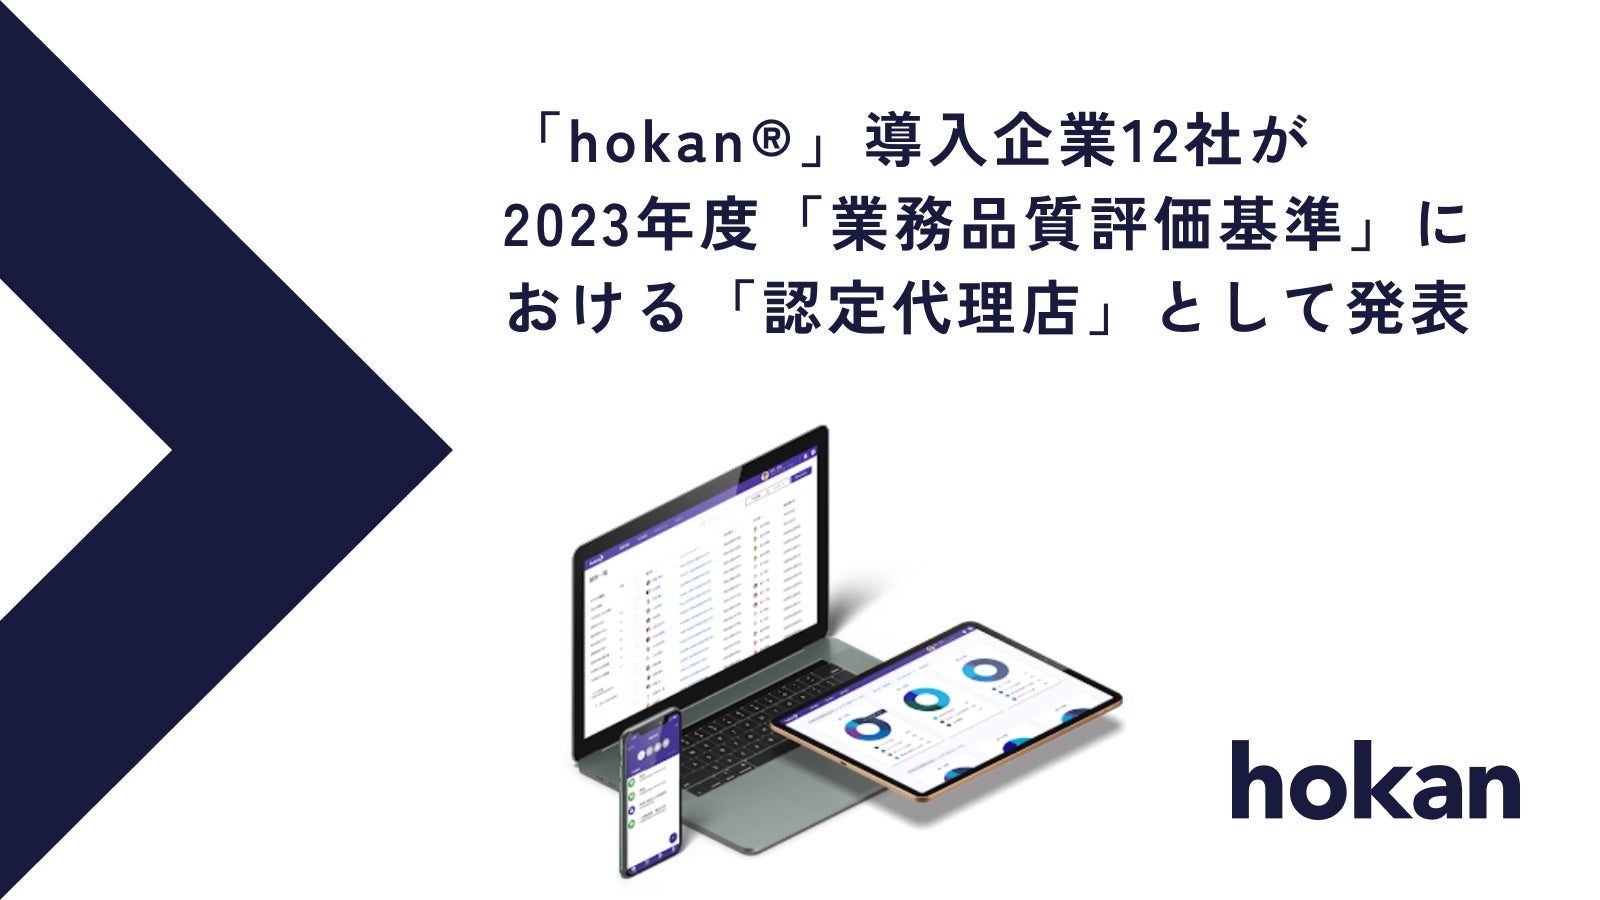 hokan®導入企業12社が2023年度業務品質評価基準における認定代理店として発表